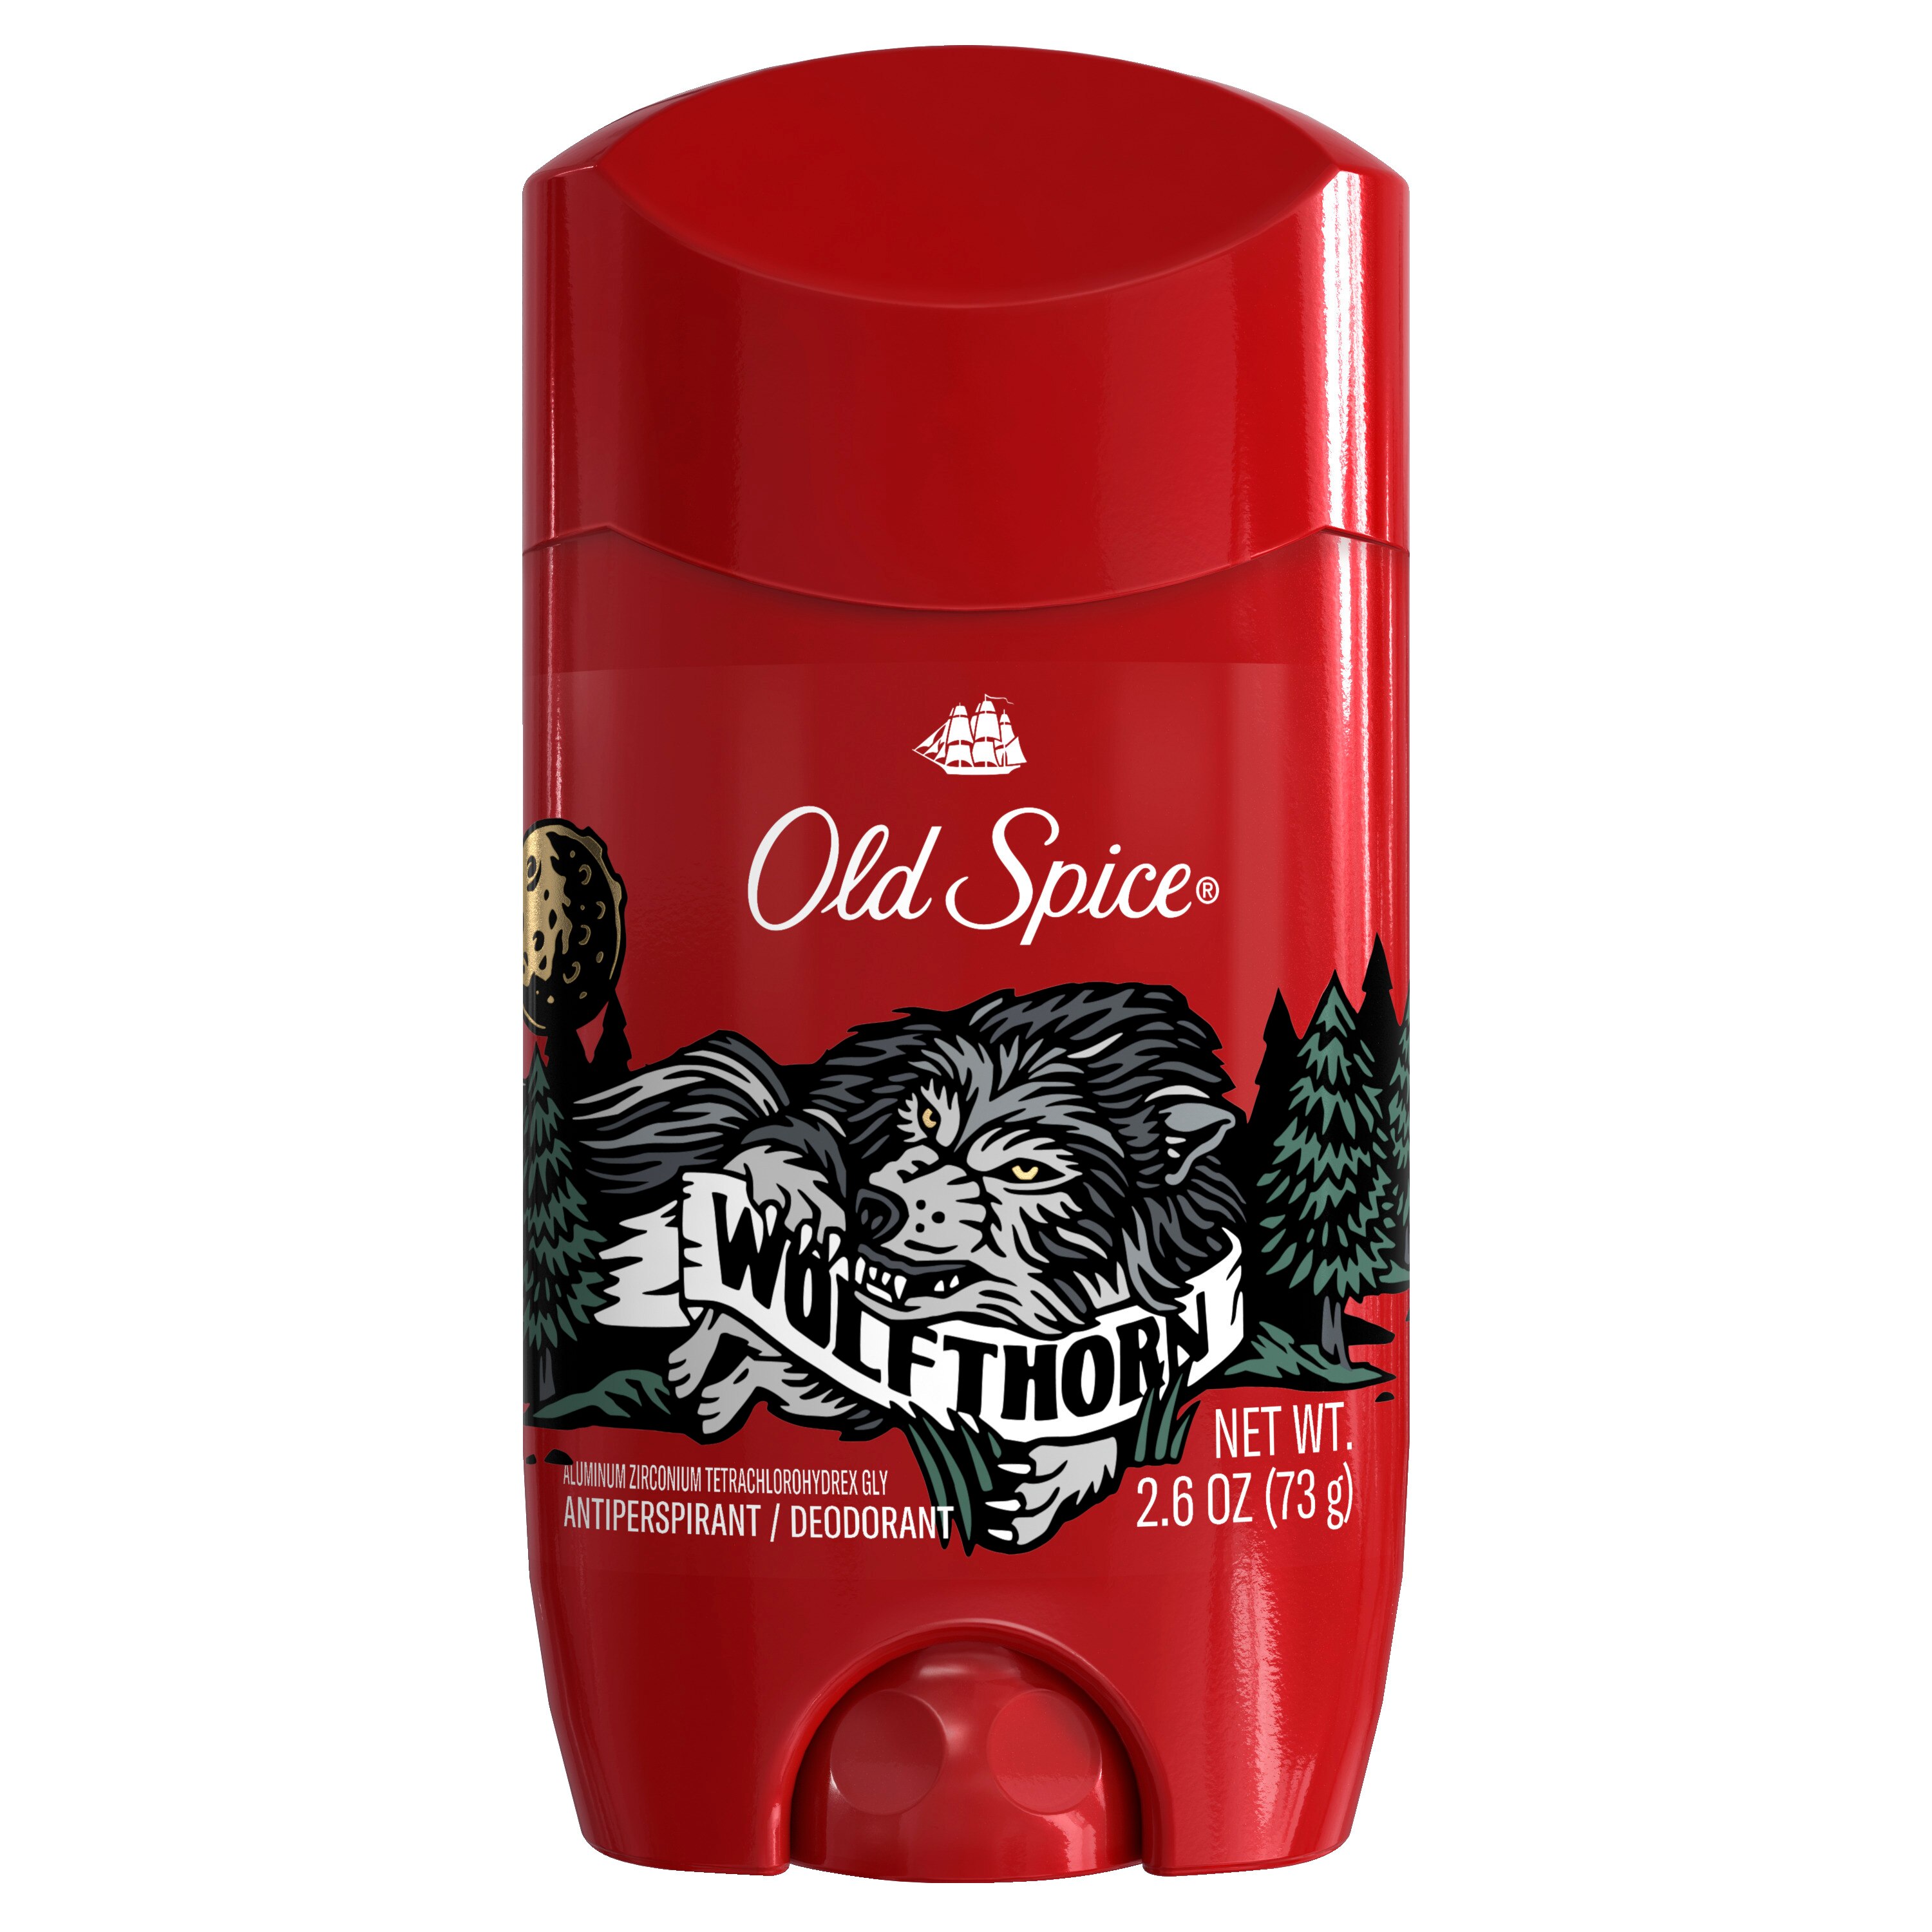 Old Spice Wild Collection Men's Invisible Solid Anti-Perspirant & Deodorant 2.6 Oz